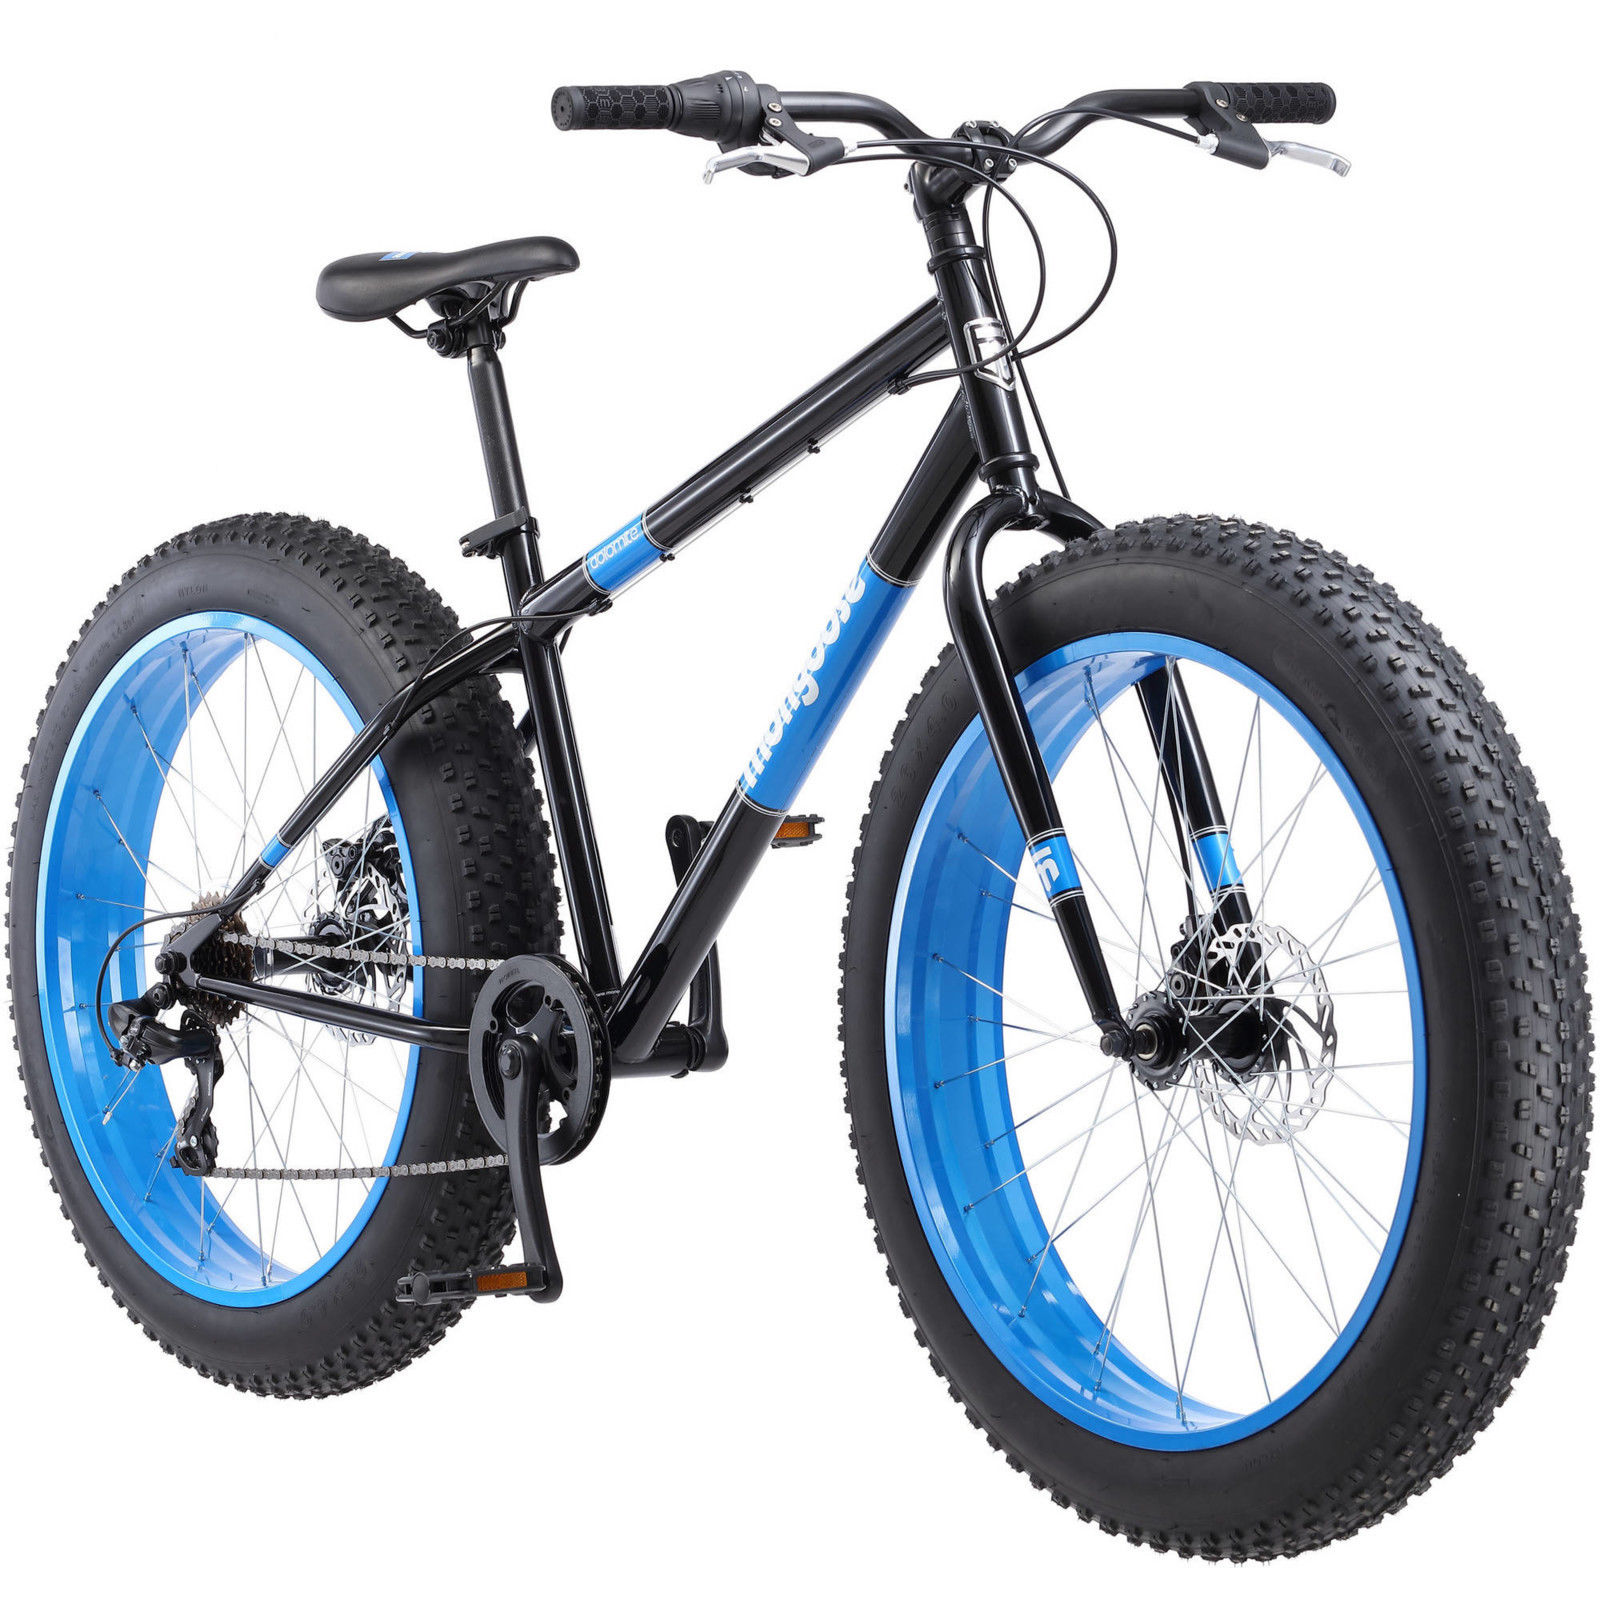 26″ Mongoose Men’s Fat Tire Bike, Black Steel Frame Shimano 7 Speed